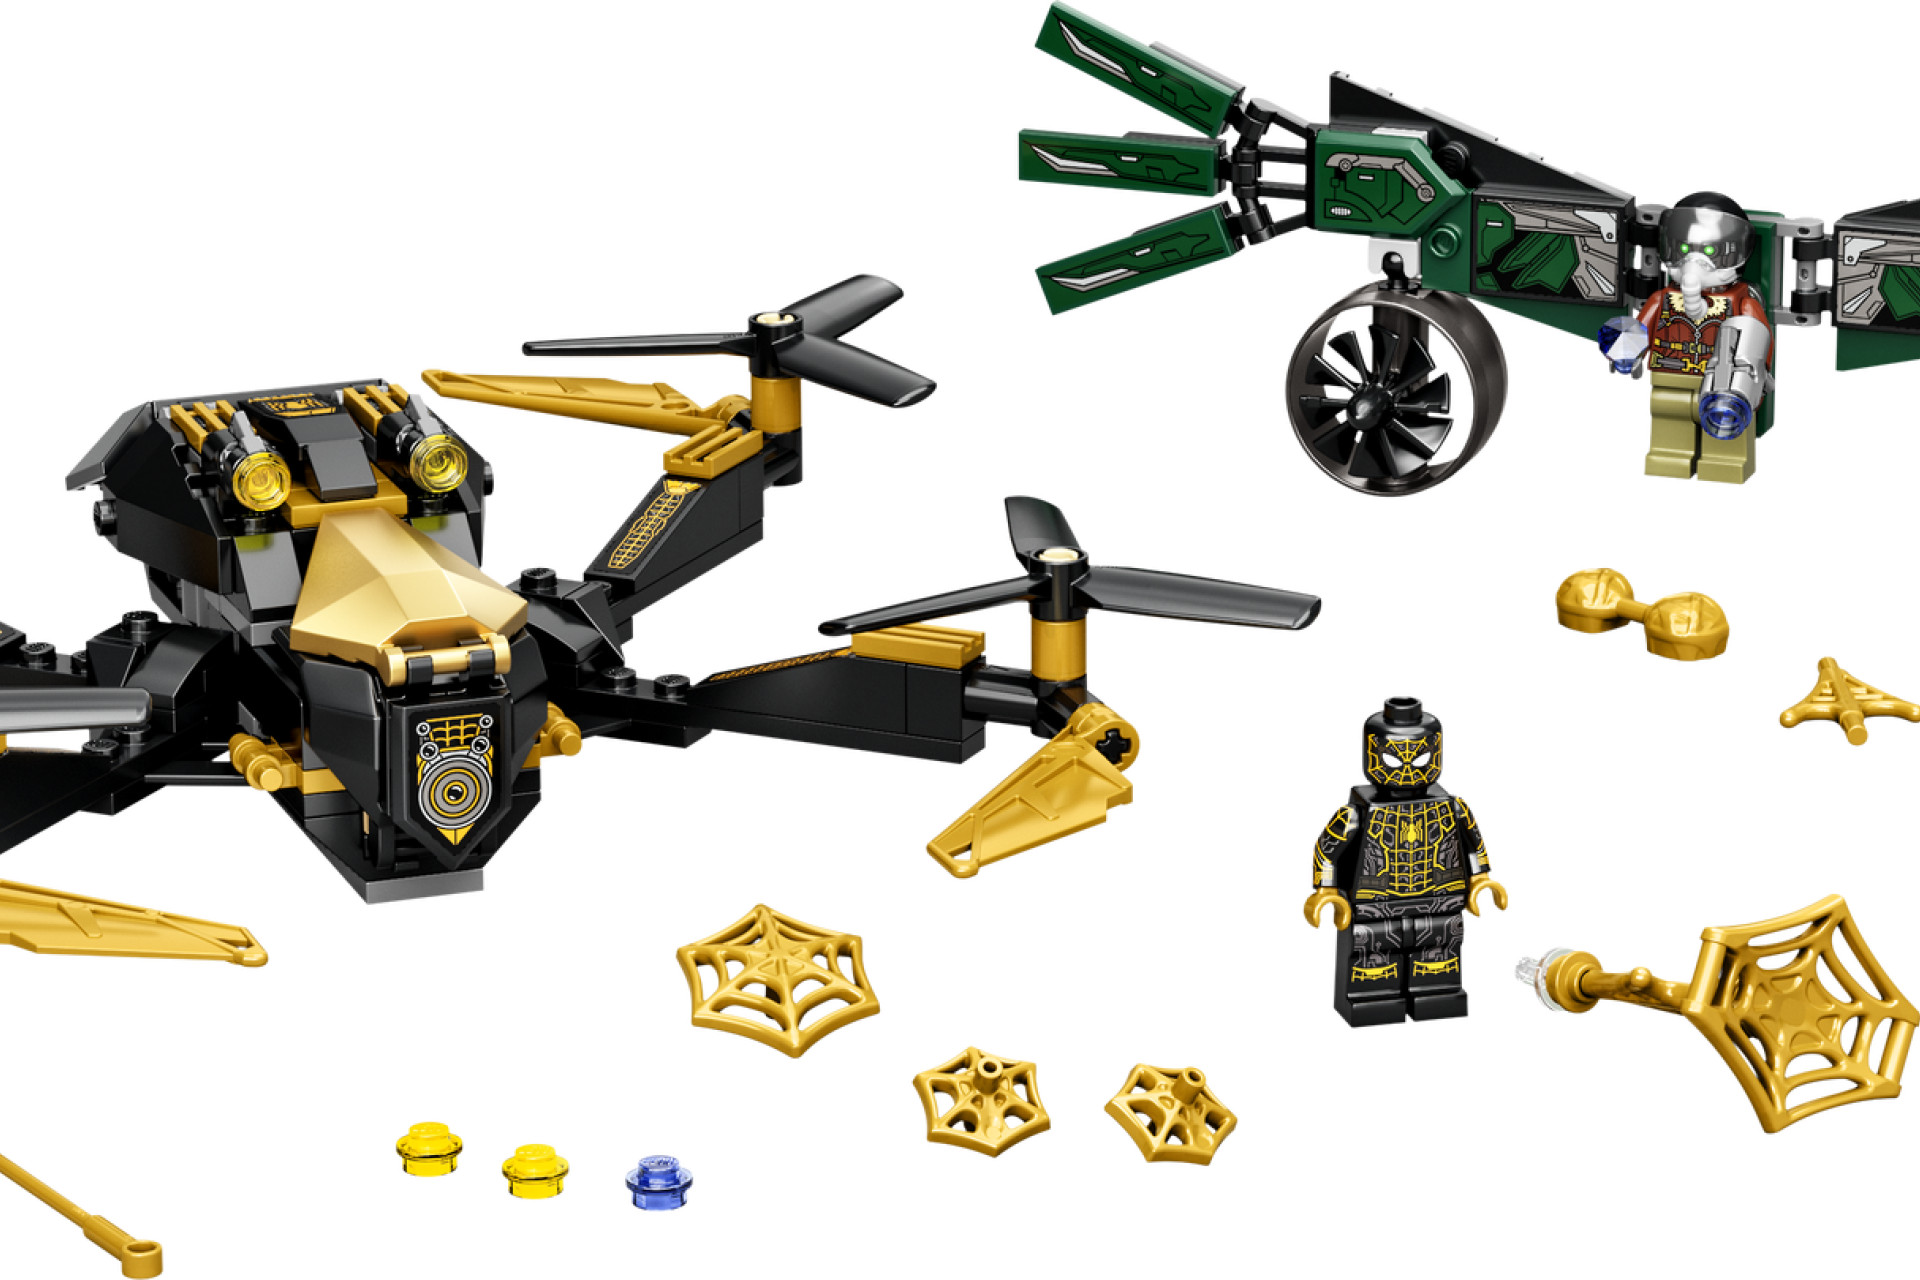 Acheter Le Drone De Duel De Spider-man - Lego® Marvel Super Heroes™ - 76195